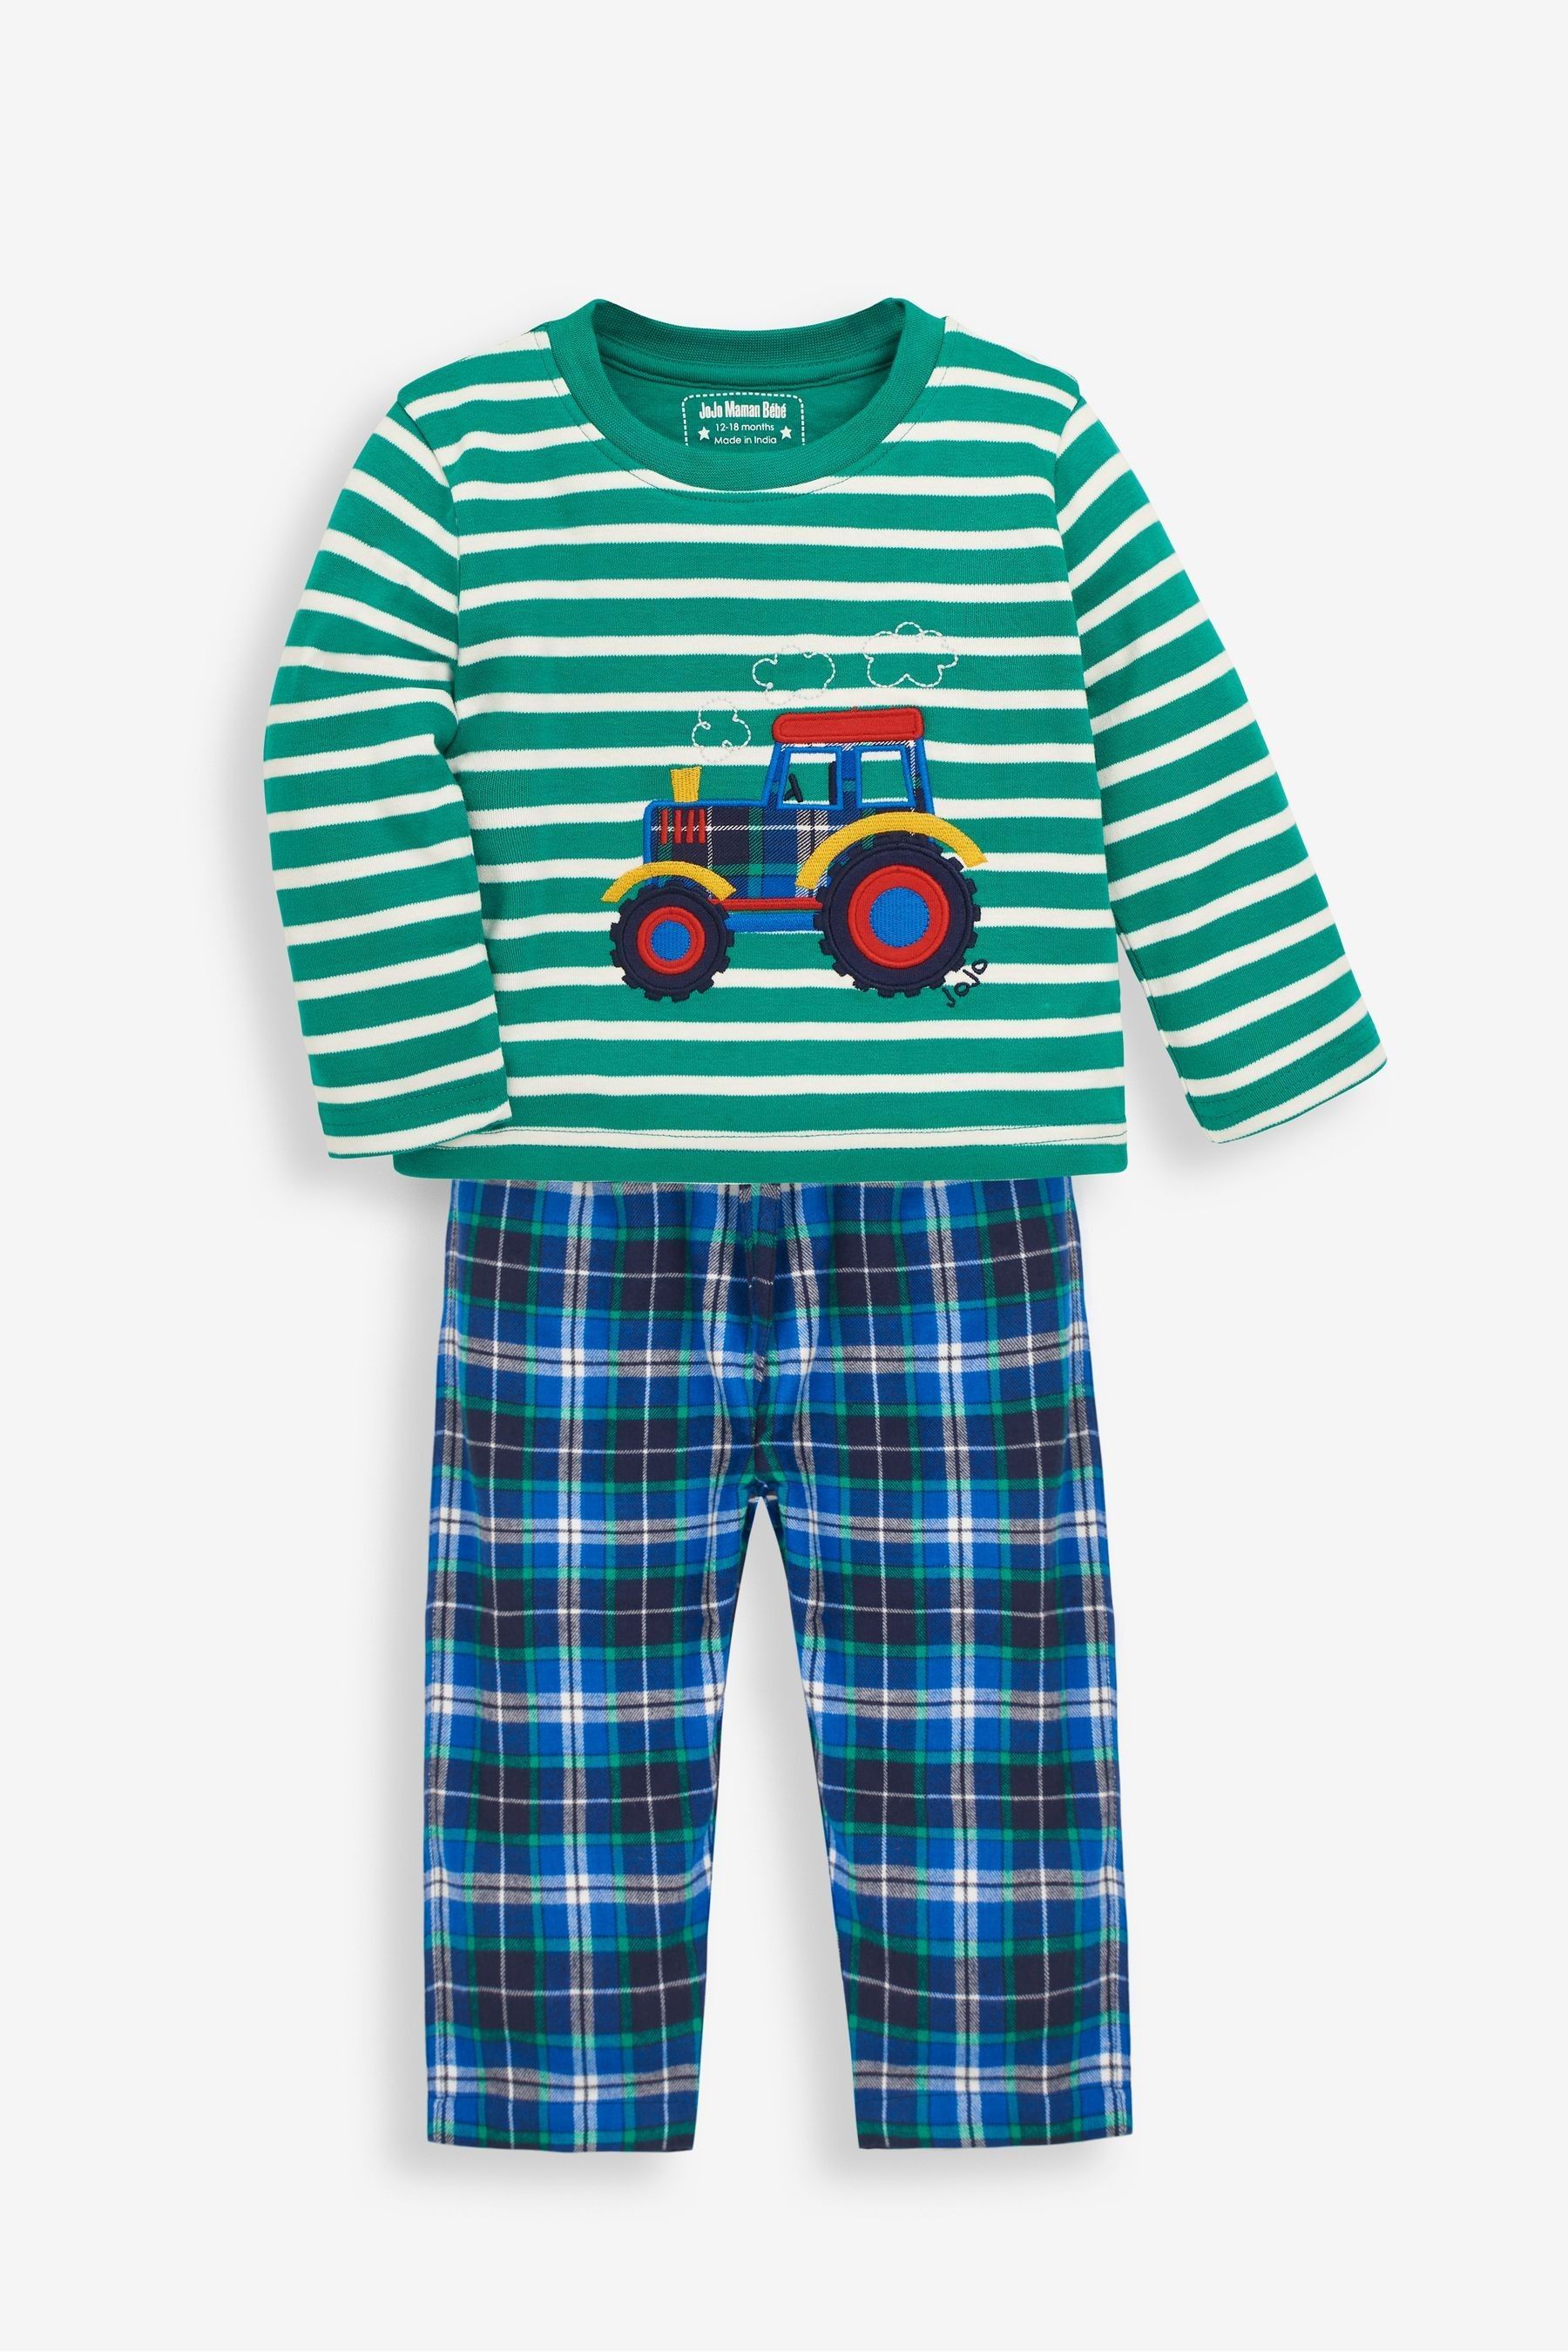 Пижама JoJo Maman bébé Tractor Mix & Match Jojo Maman Bébé, зеленый